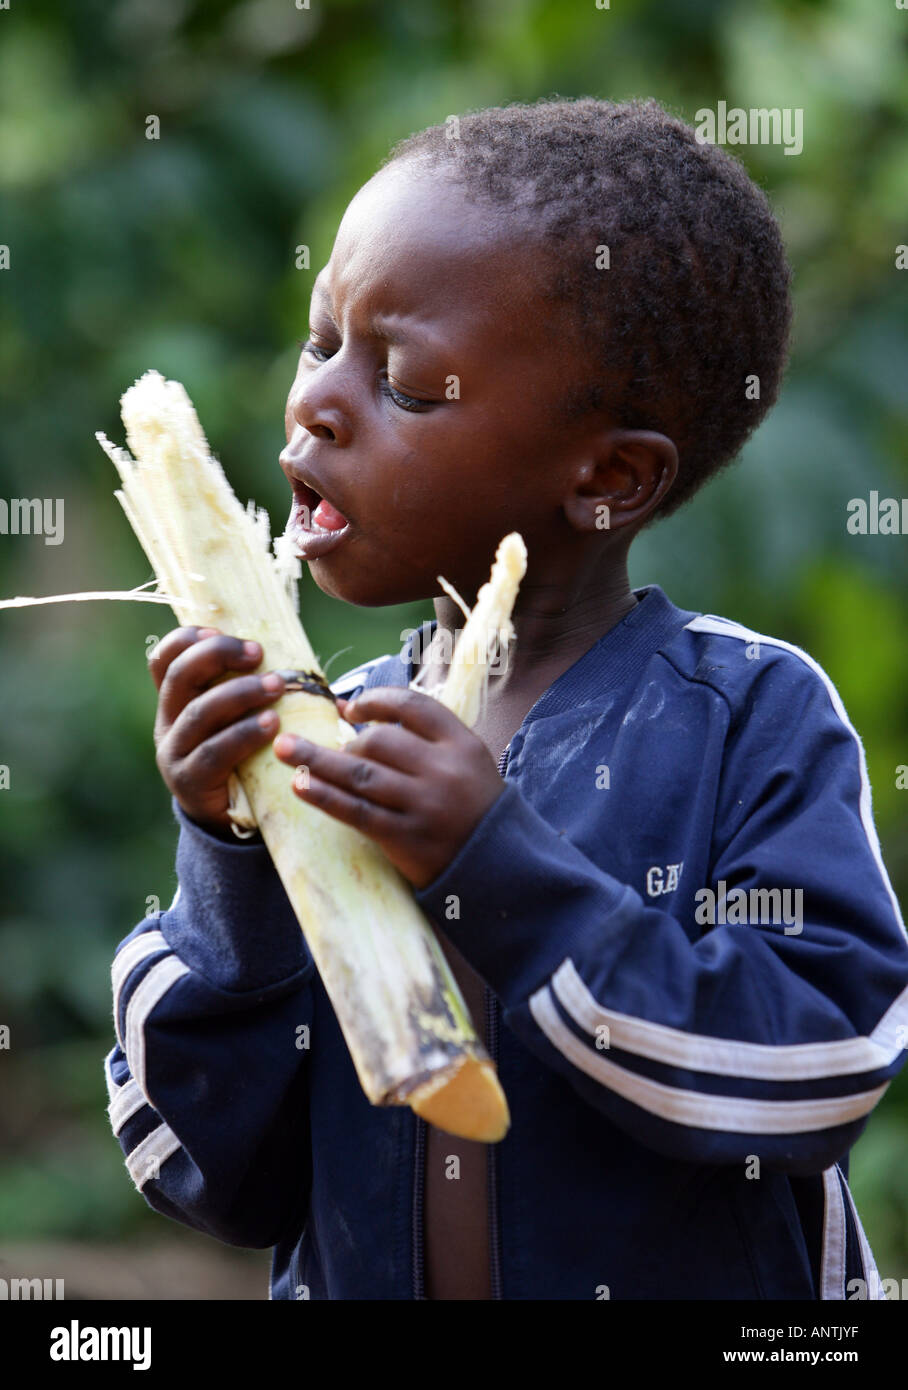 boy chewing sugarcane, Tansania Stock Photo